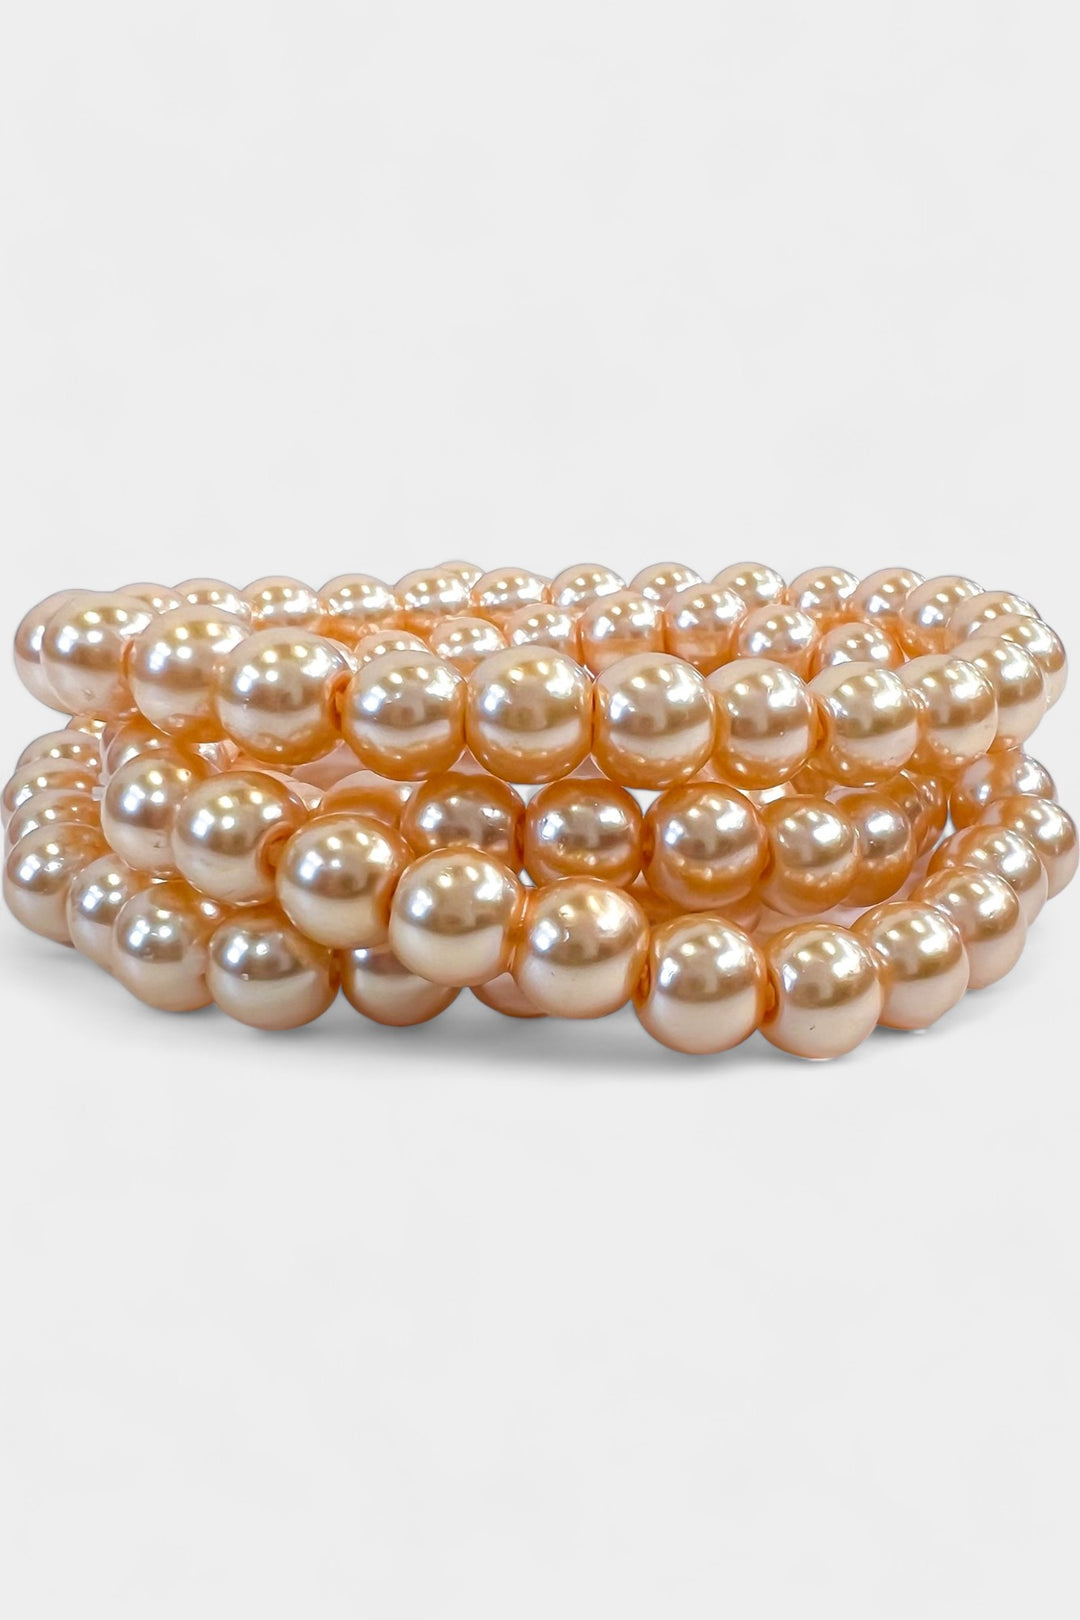 Tangerine Pearl Stretch Bracelets